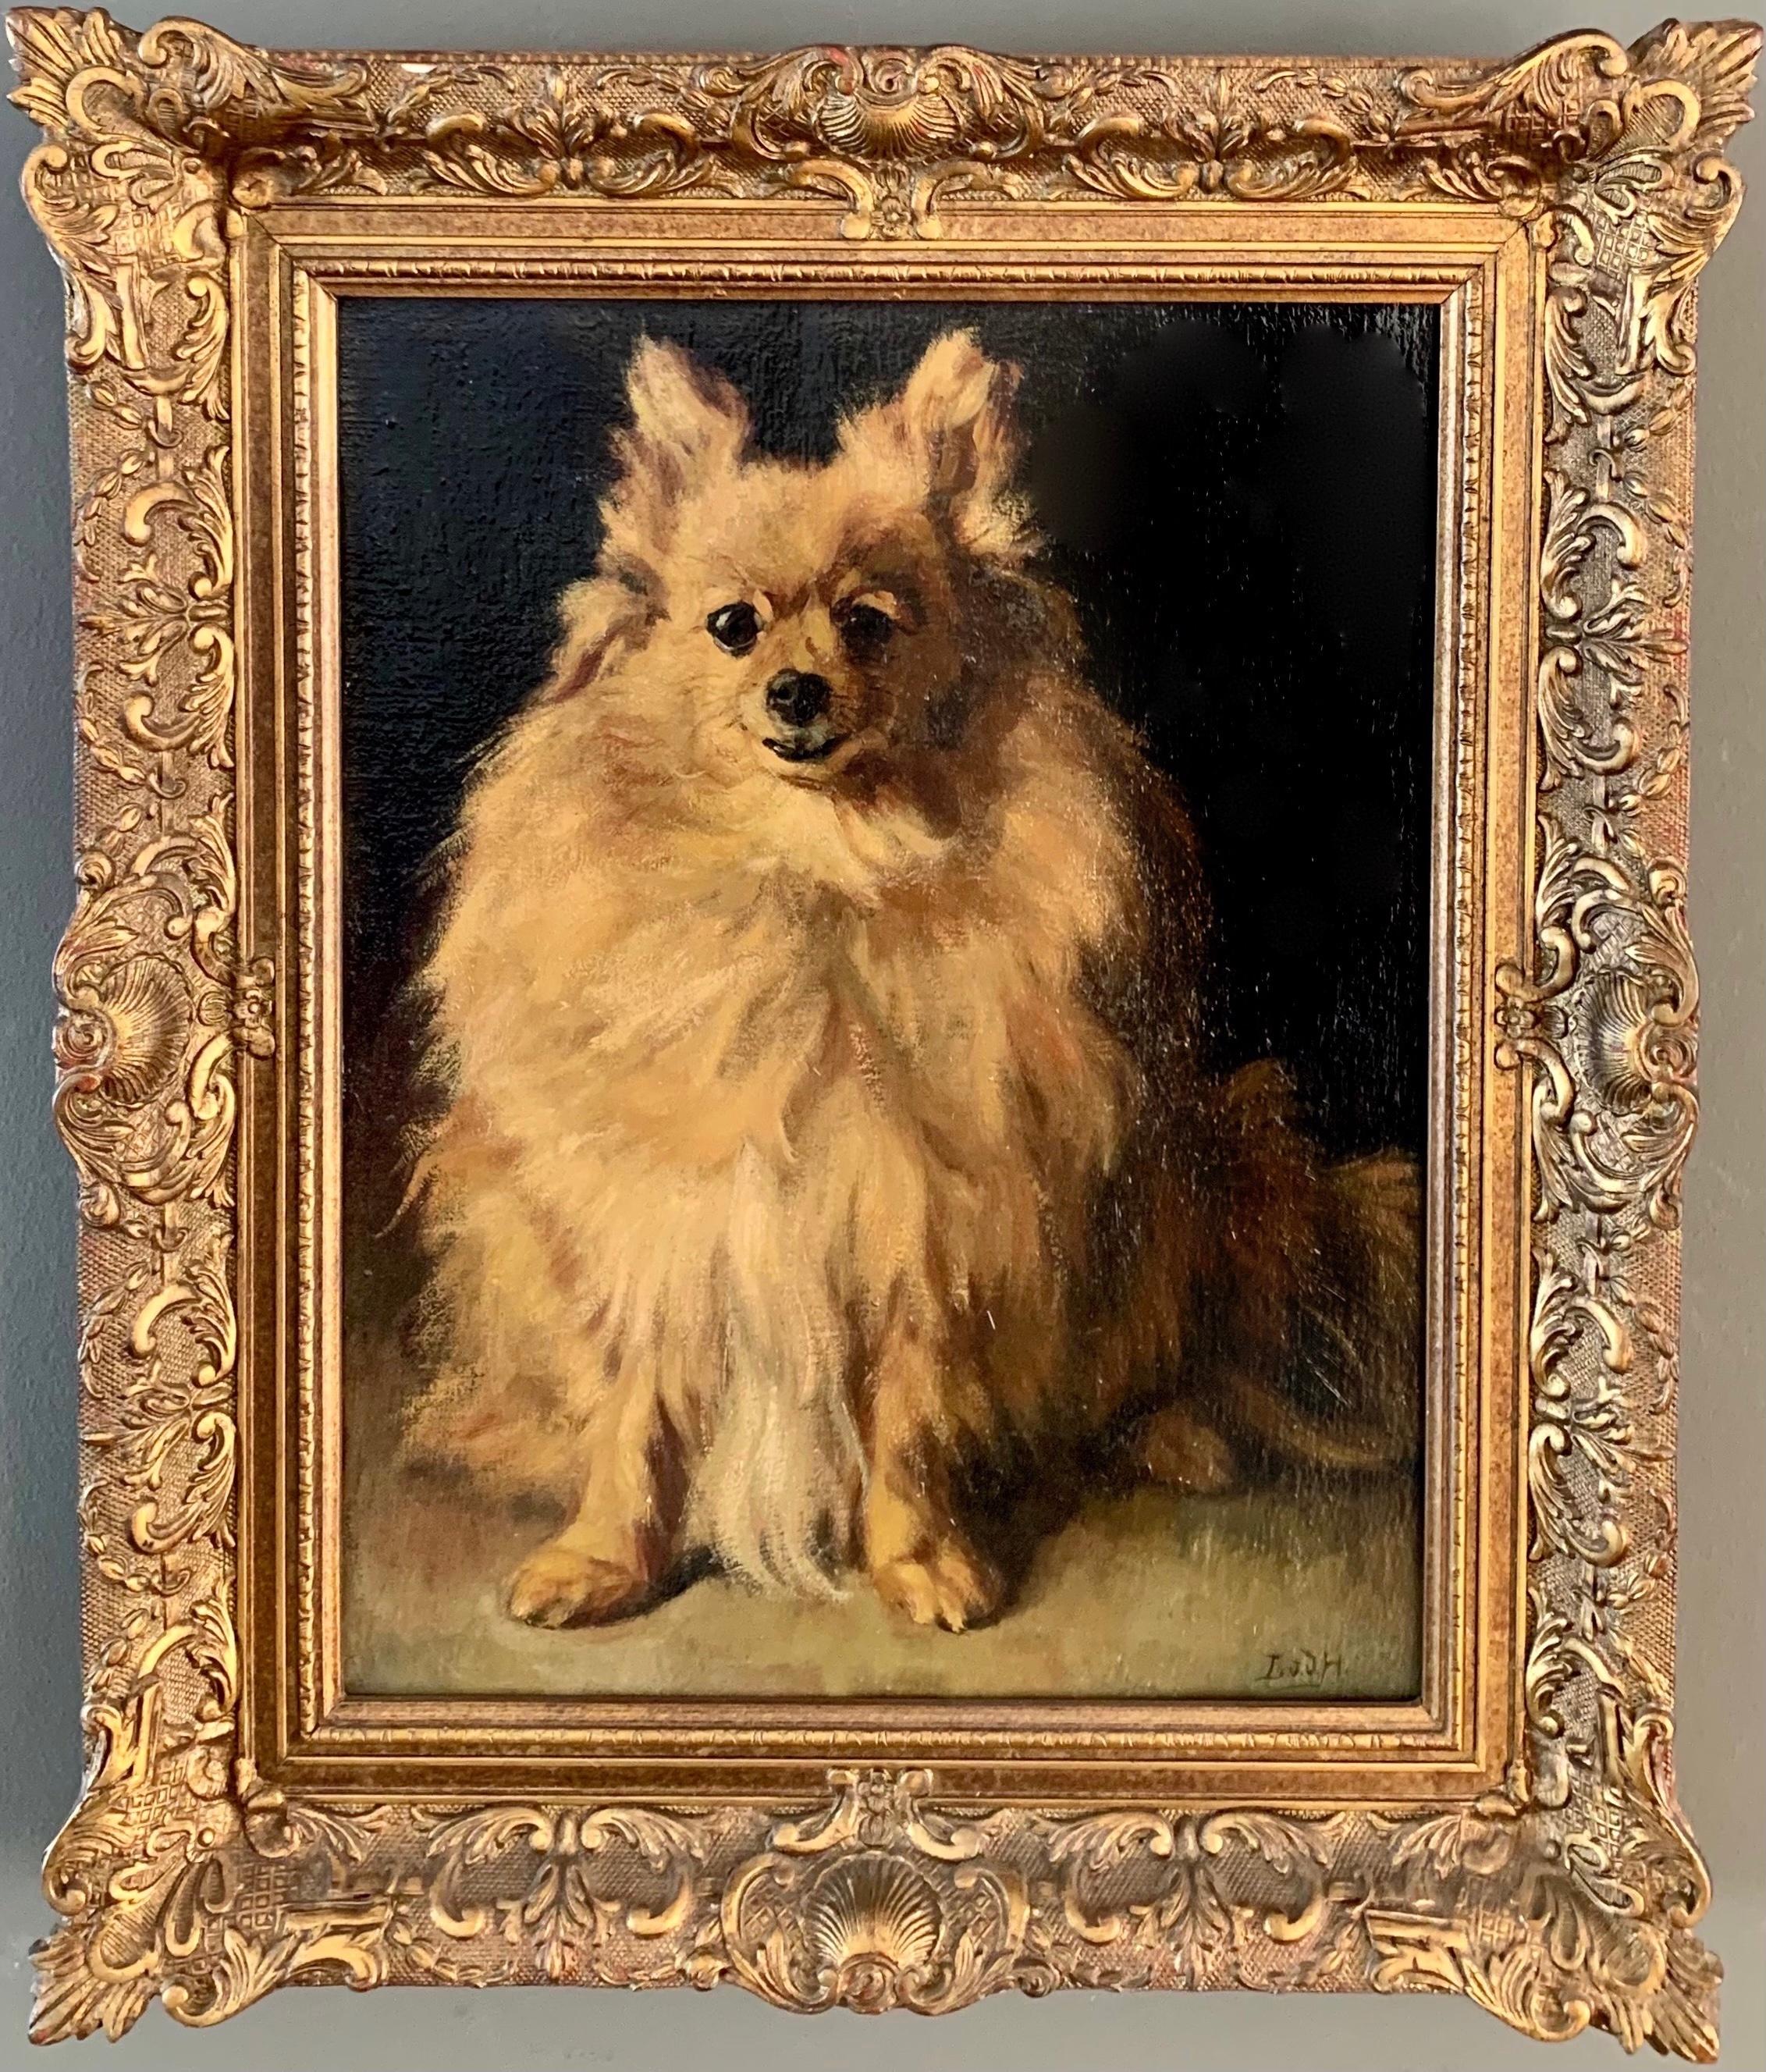 Otto Eerelman Interior Painting - 19th century European Portrait of a Pomeranian or Chihuahua- Life size Dog Genre